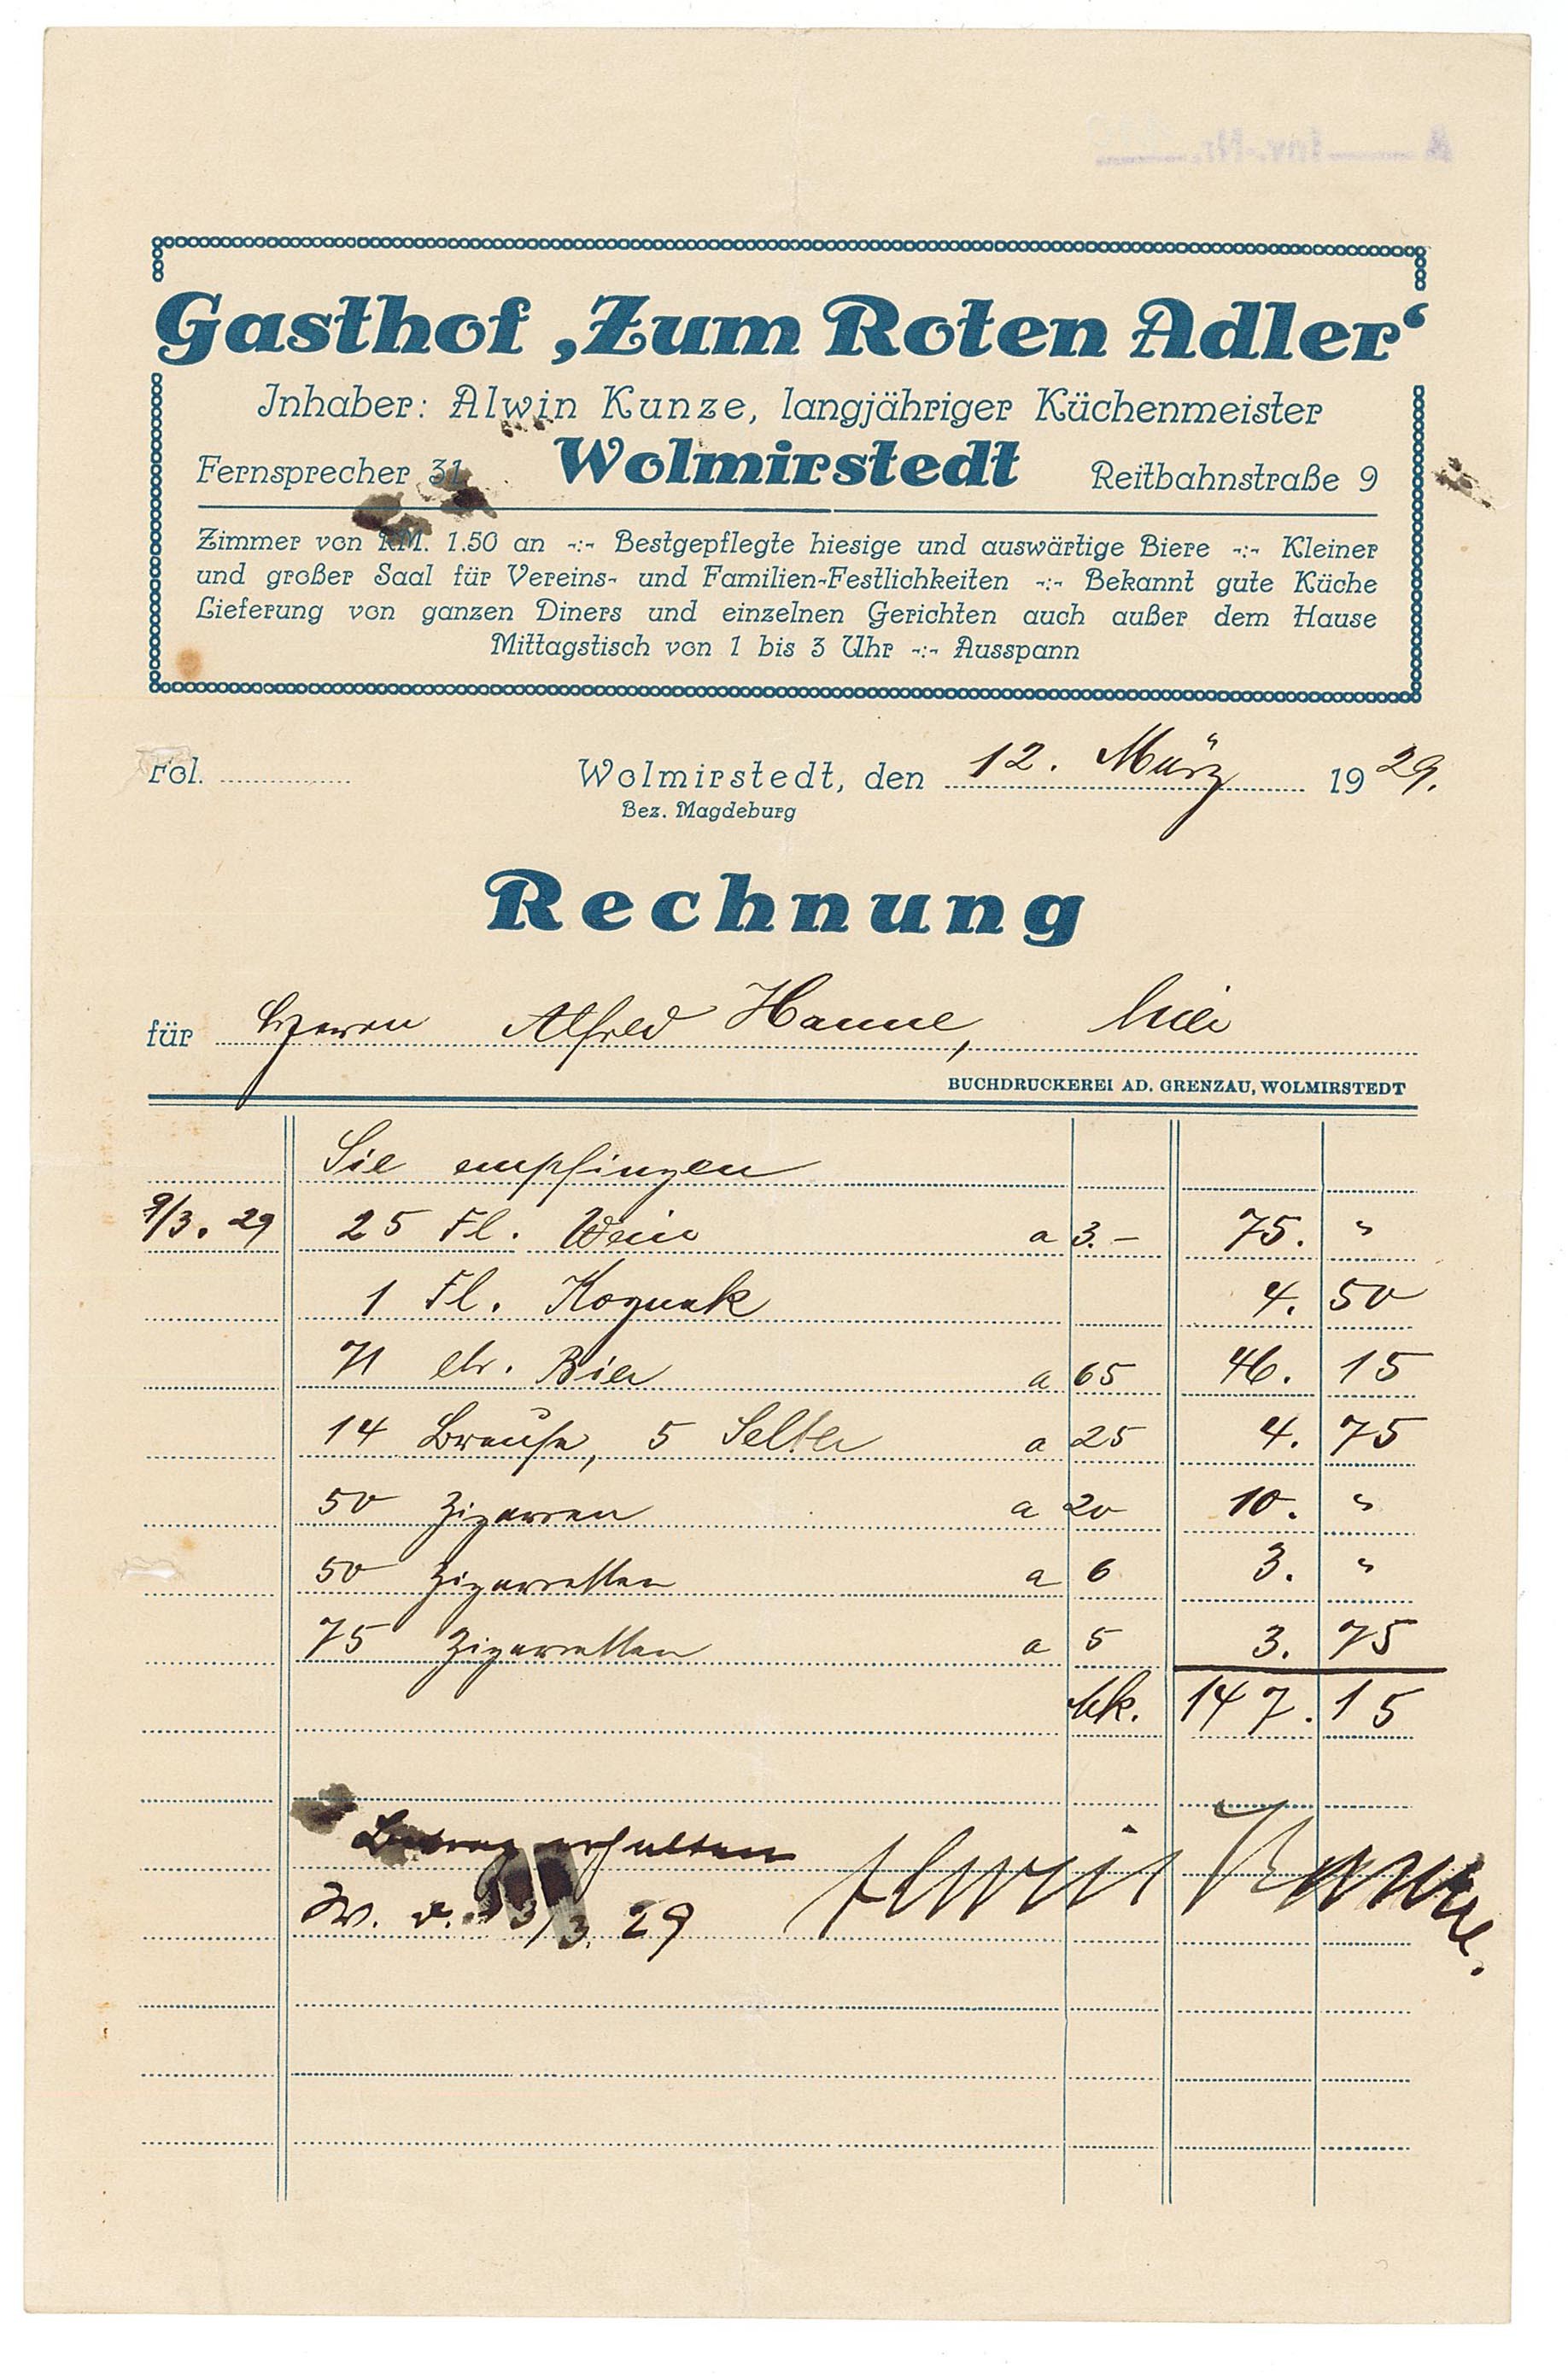 Rechnung "Roter Adler", Wolmirstedt, 1929 (Museum Wolmirstedt RR-F)